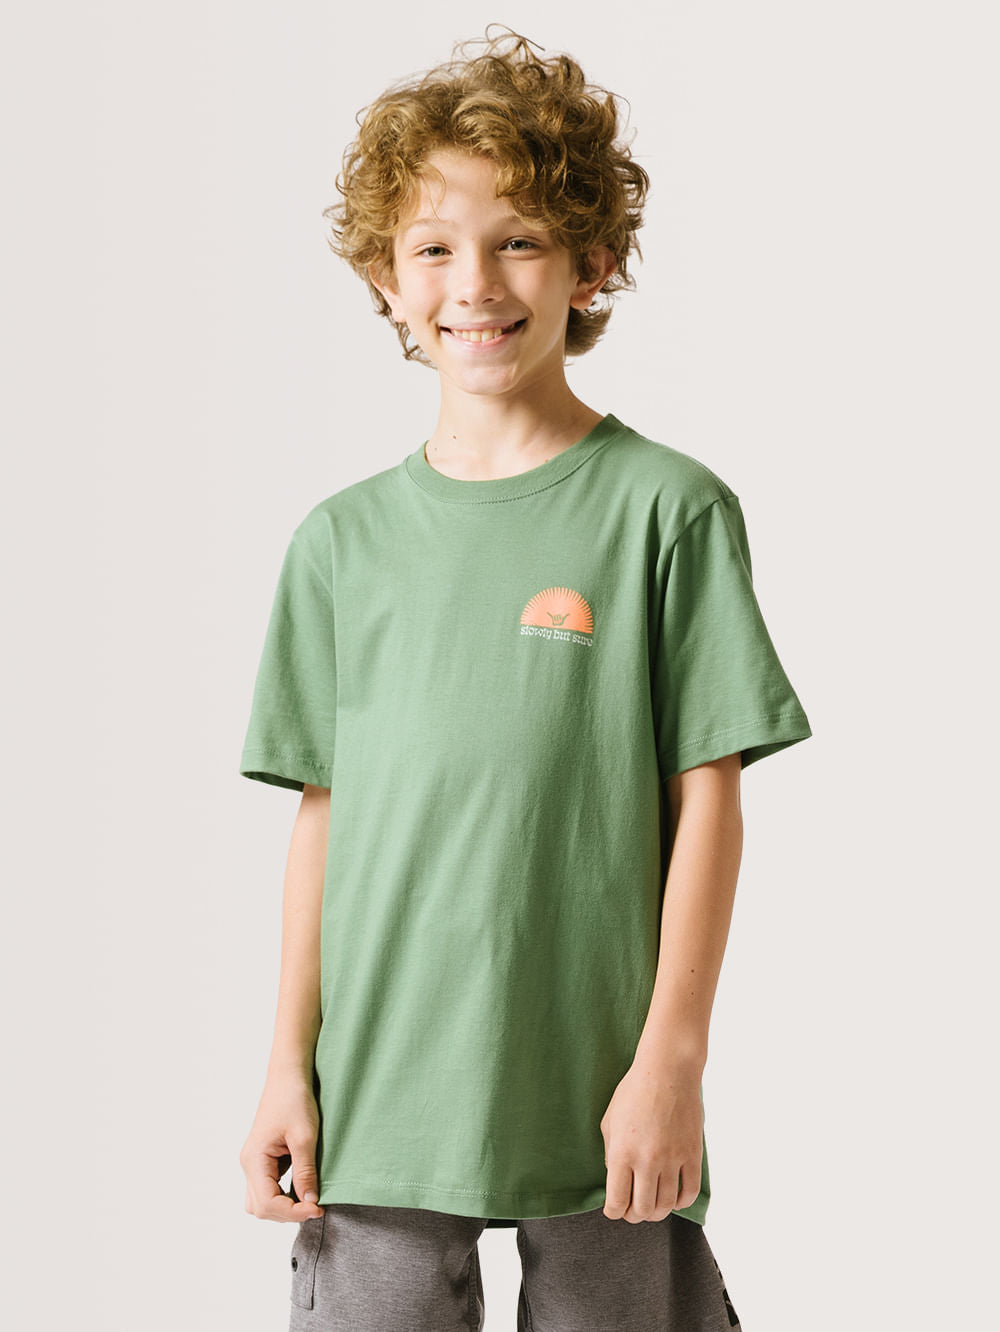 Camiseta Hang Loose Sunny Juvenil Verde